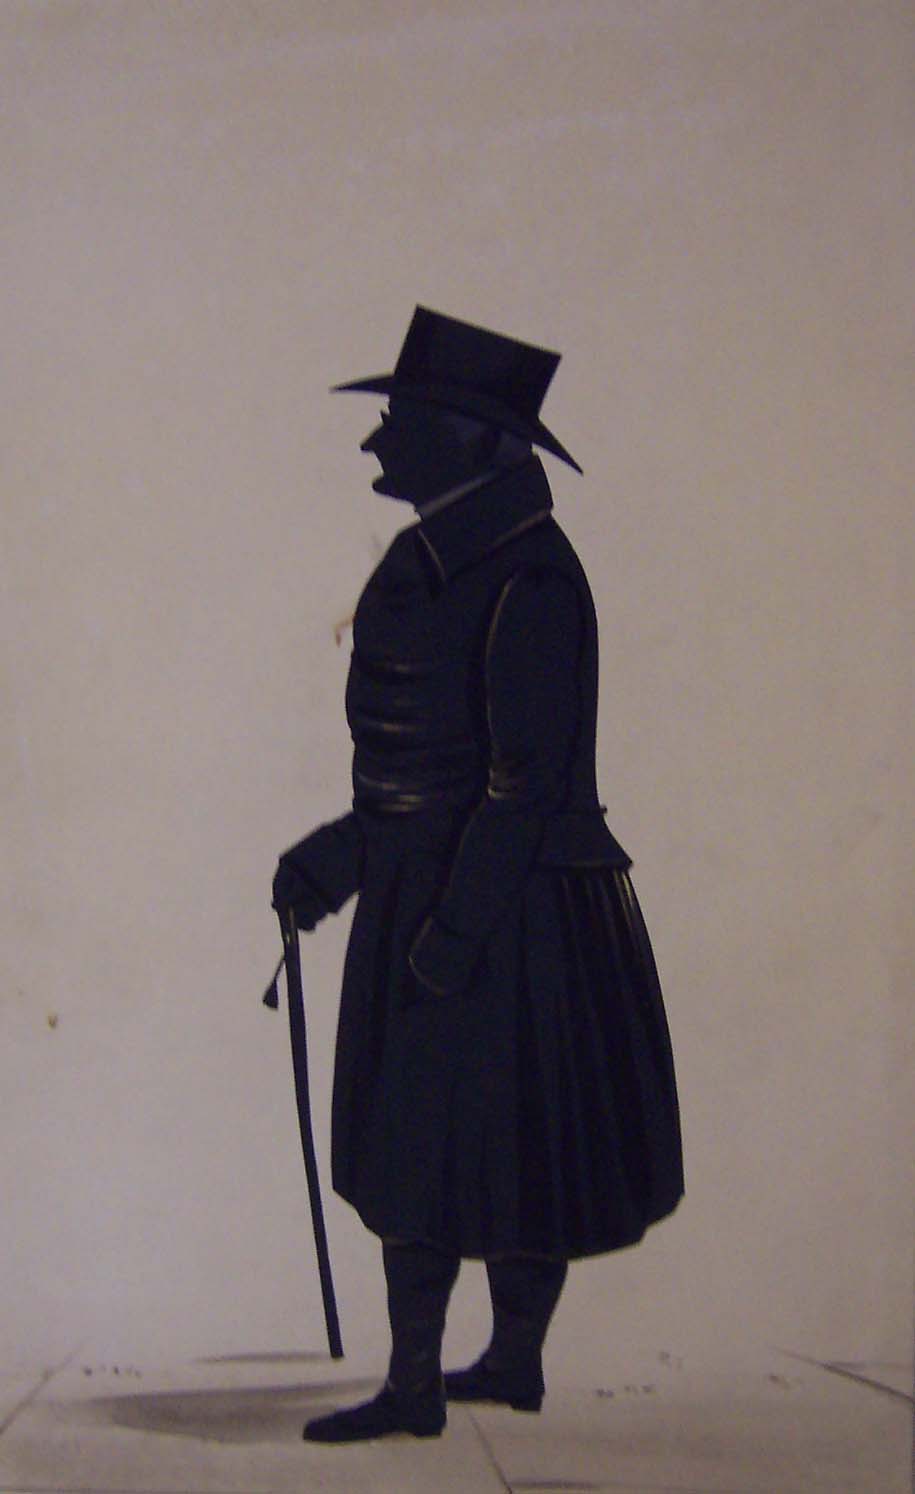 Silhouette of John Dalton